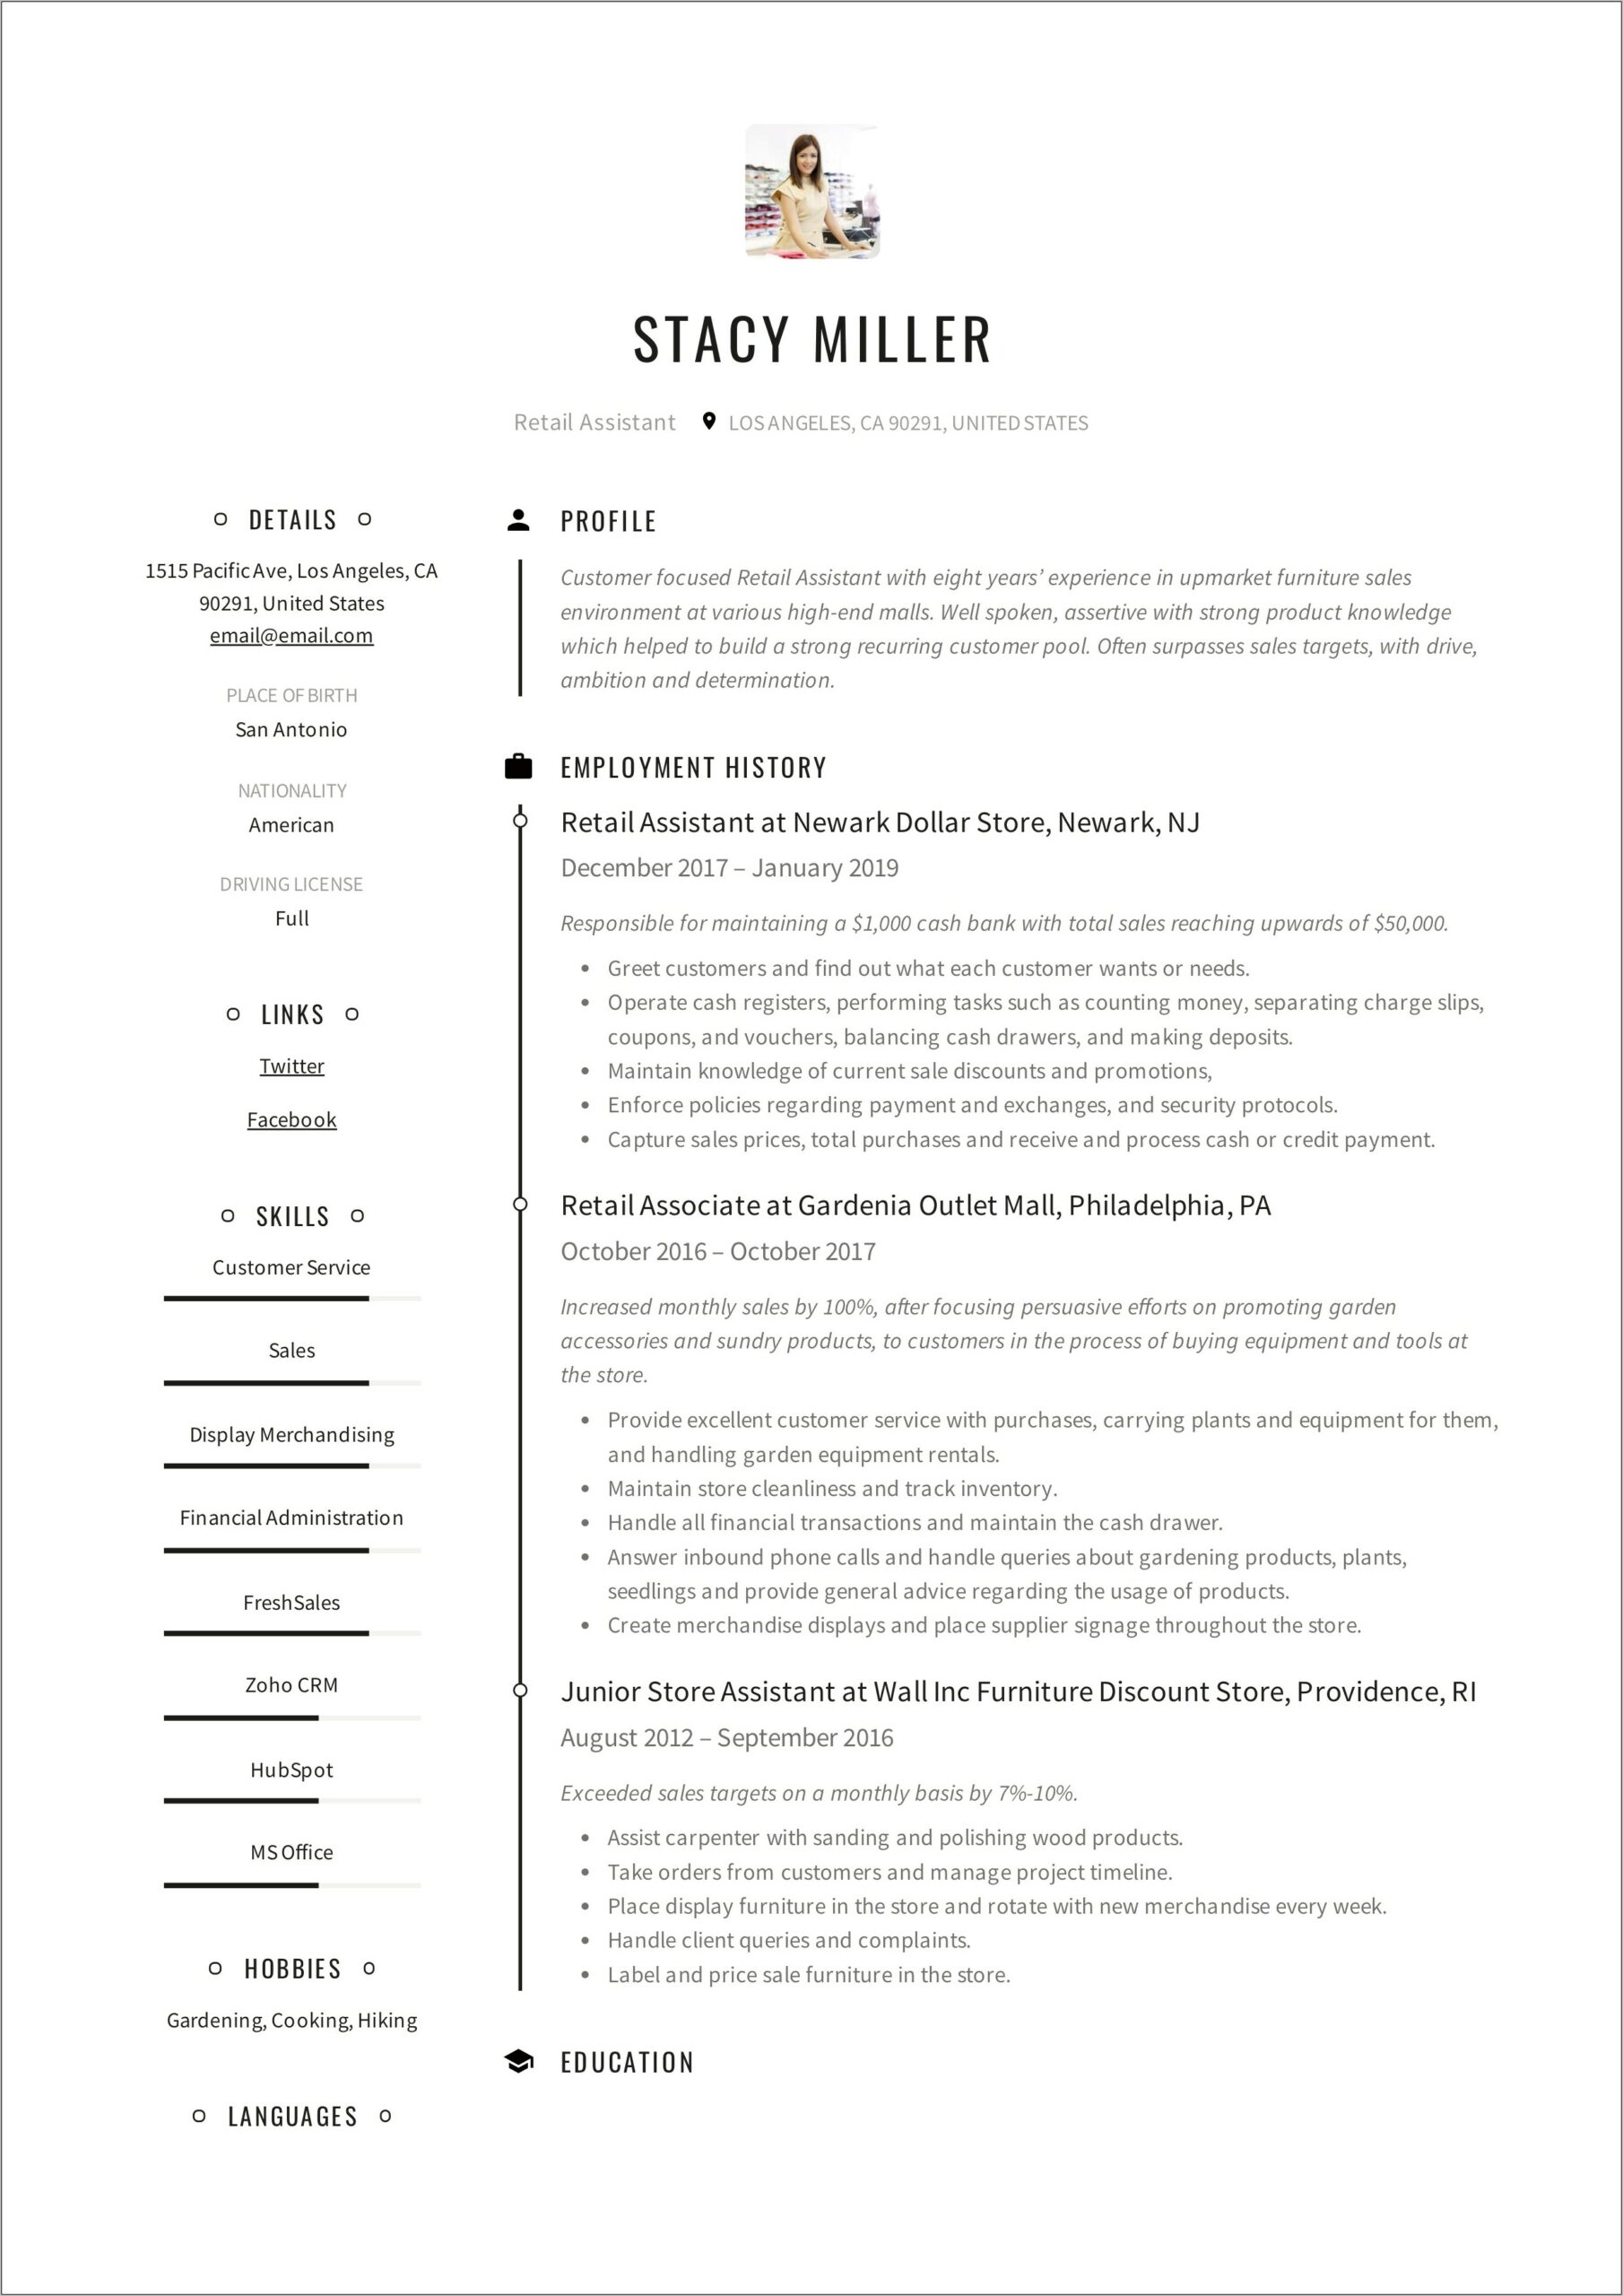 Sales Assistant Manager Job Description Resume